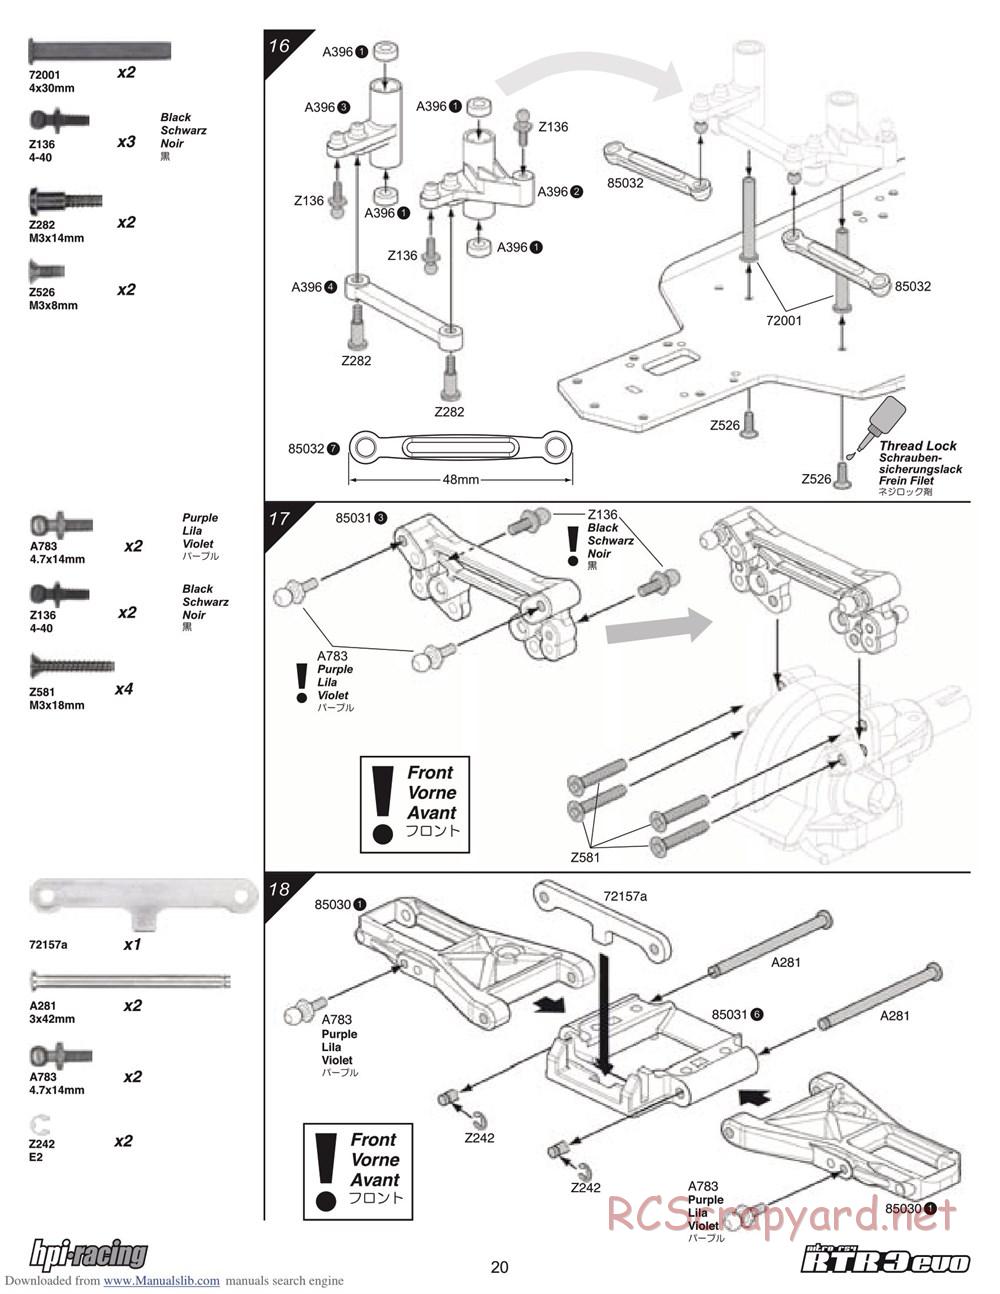 HPI - Nitro RS4 3 Evo - Manual - Page 20